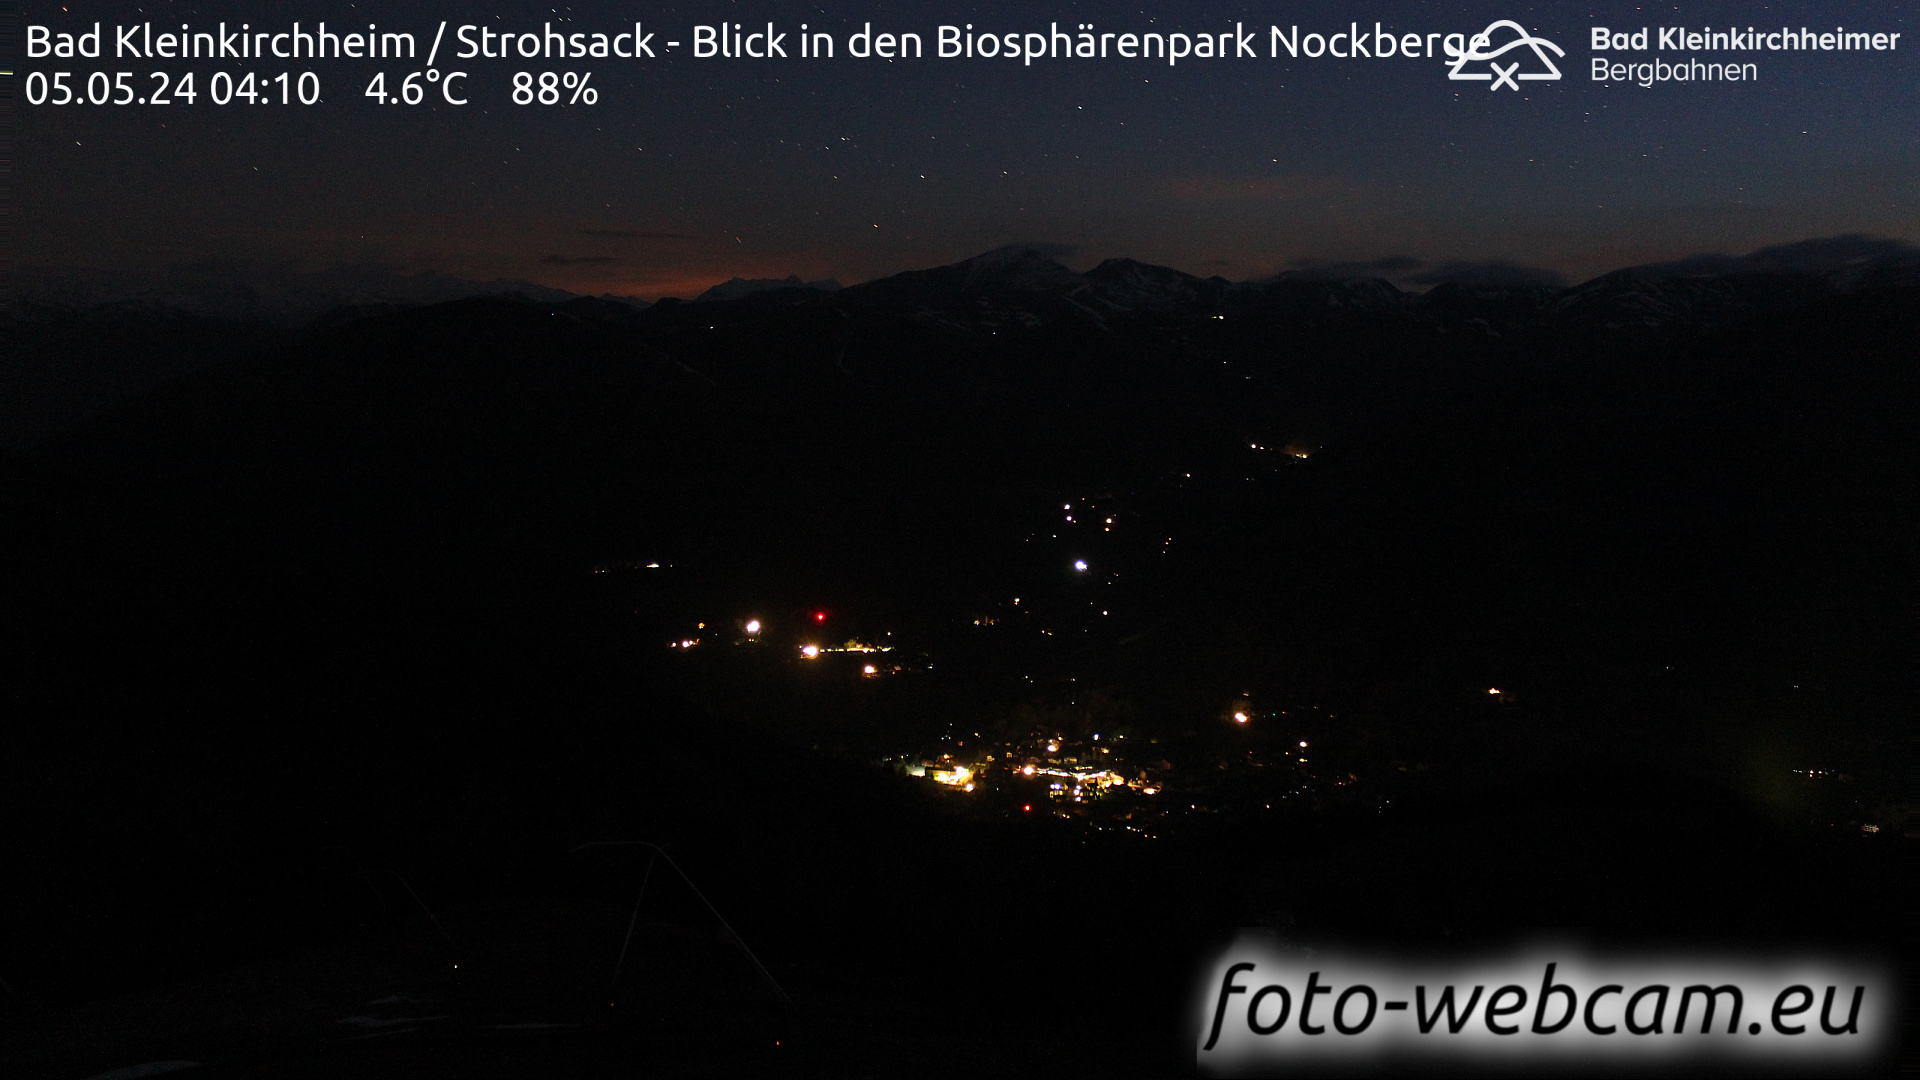 Bad Kleinkirchheim Mon. 04:23